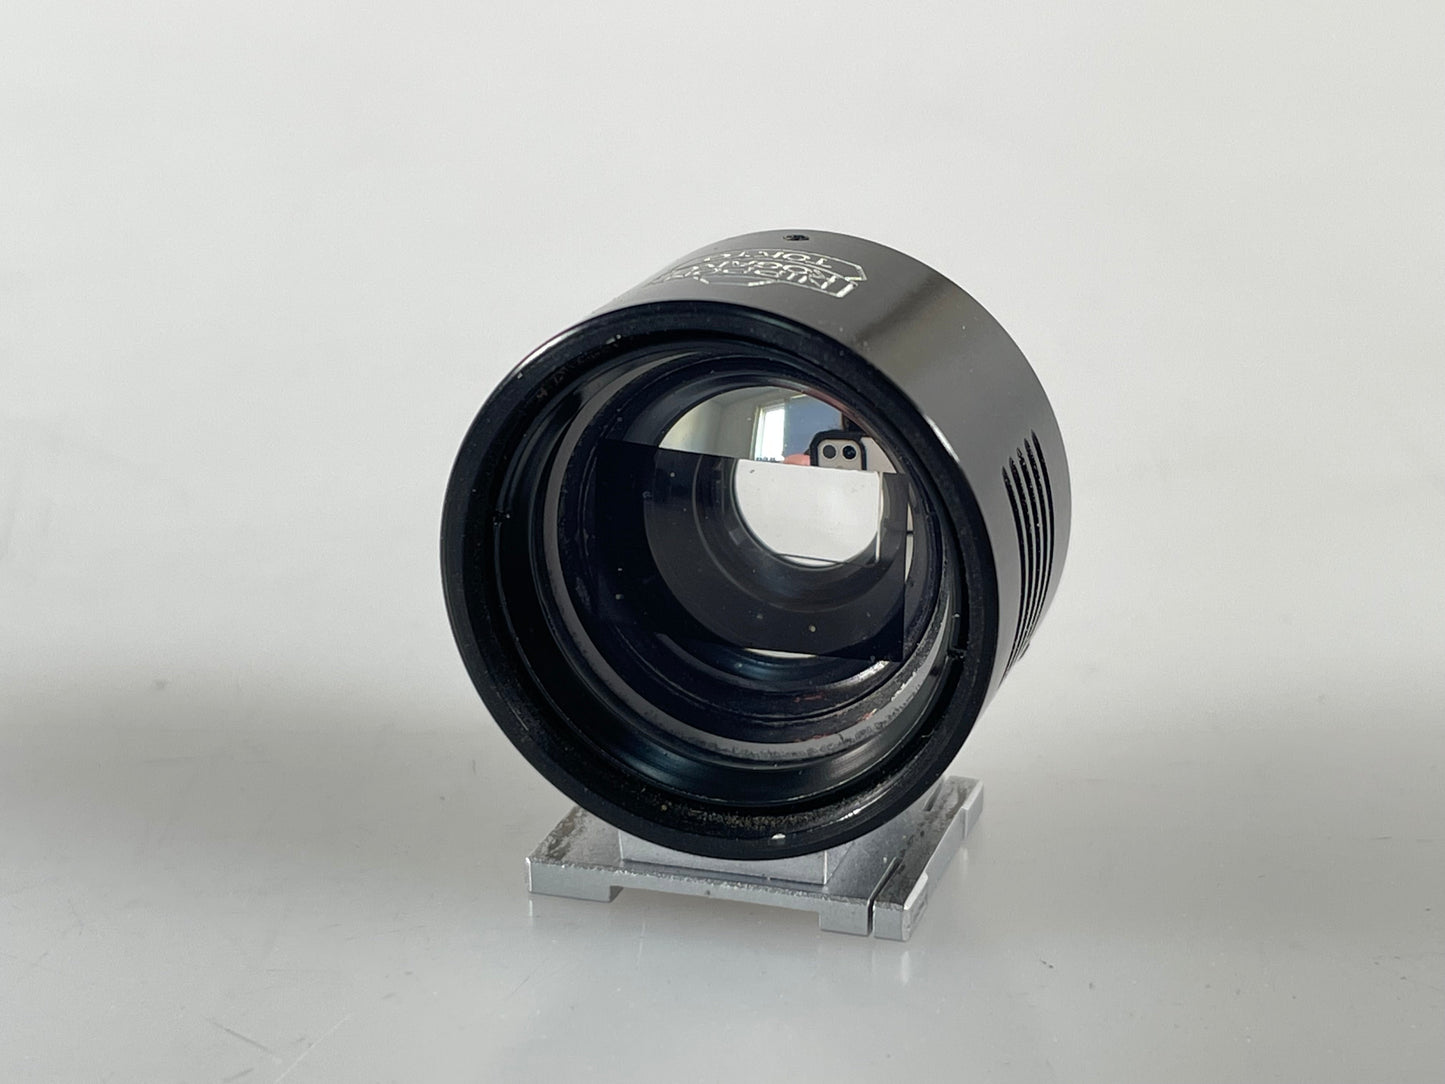 Nikon RF rangefinder 3.5cm black BL bright line finder with case Rare